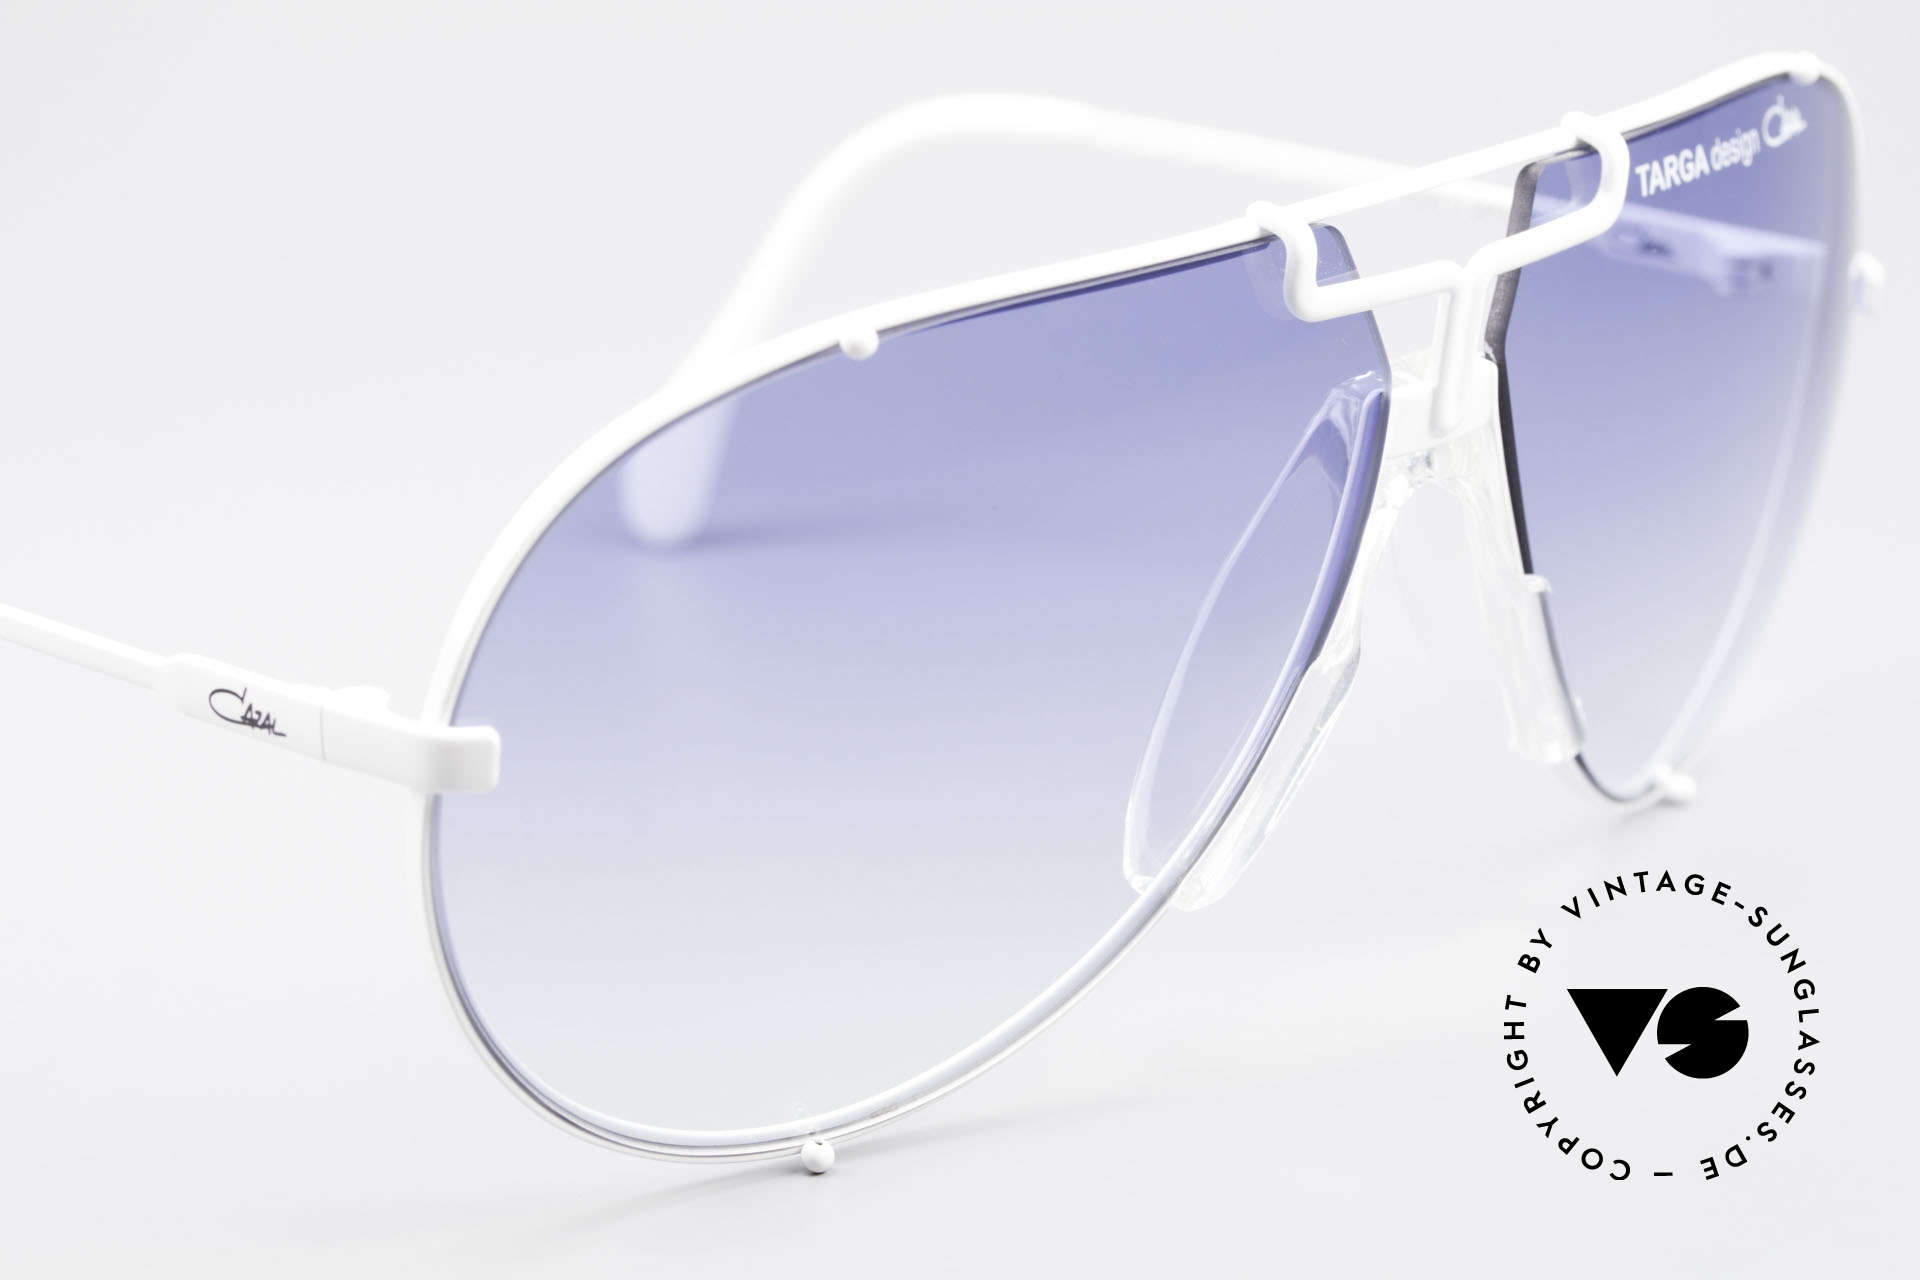 Sunglasses Cazal 901 Targa Design Xl Aviator Sunglasses Legend